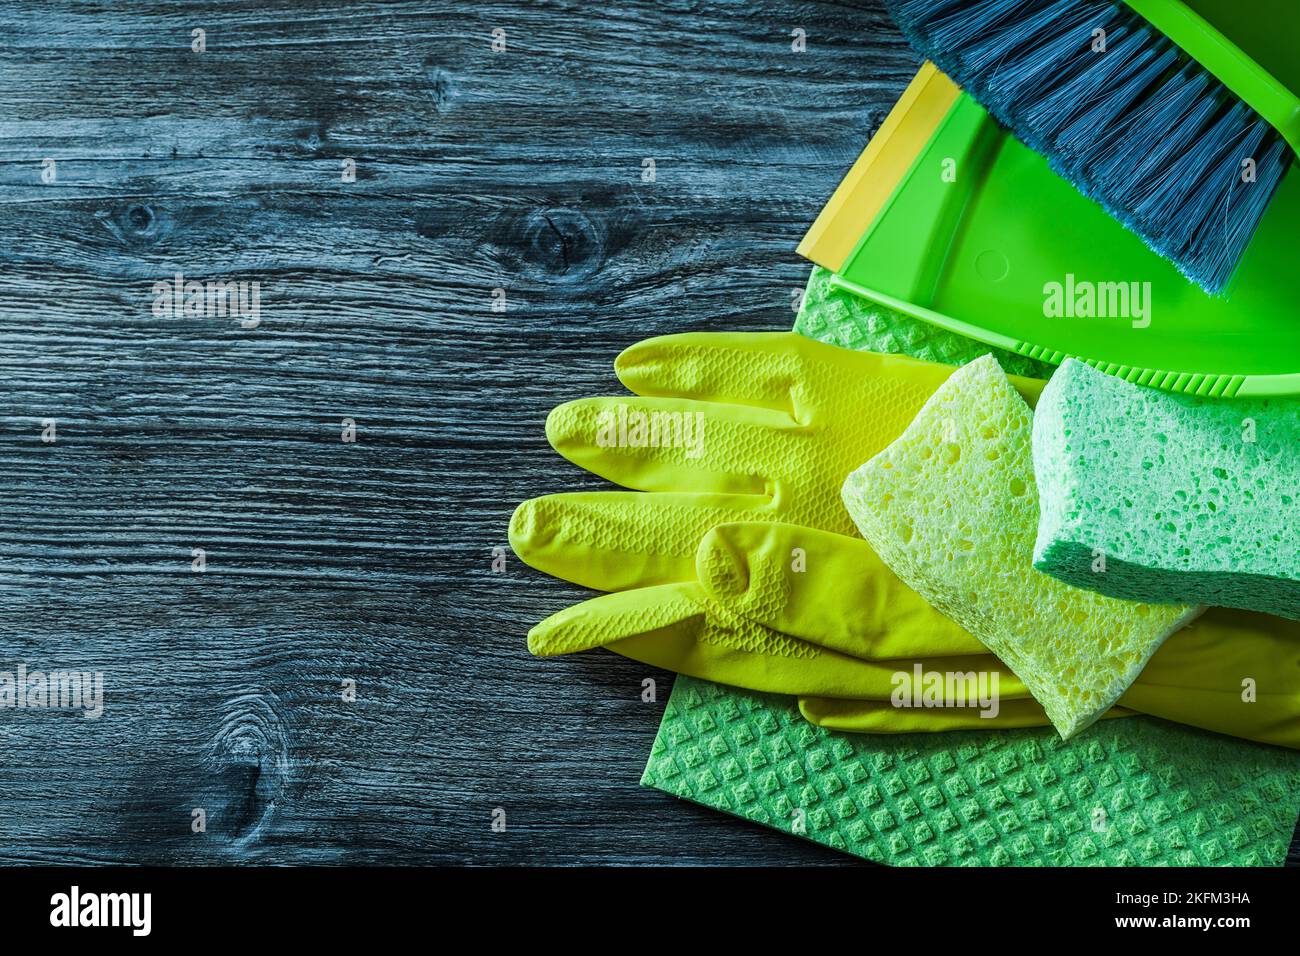 Dustpan brush sponges safety gloves washcloth on wooden board. Stock Photo